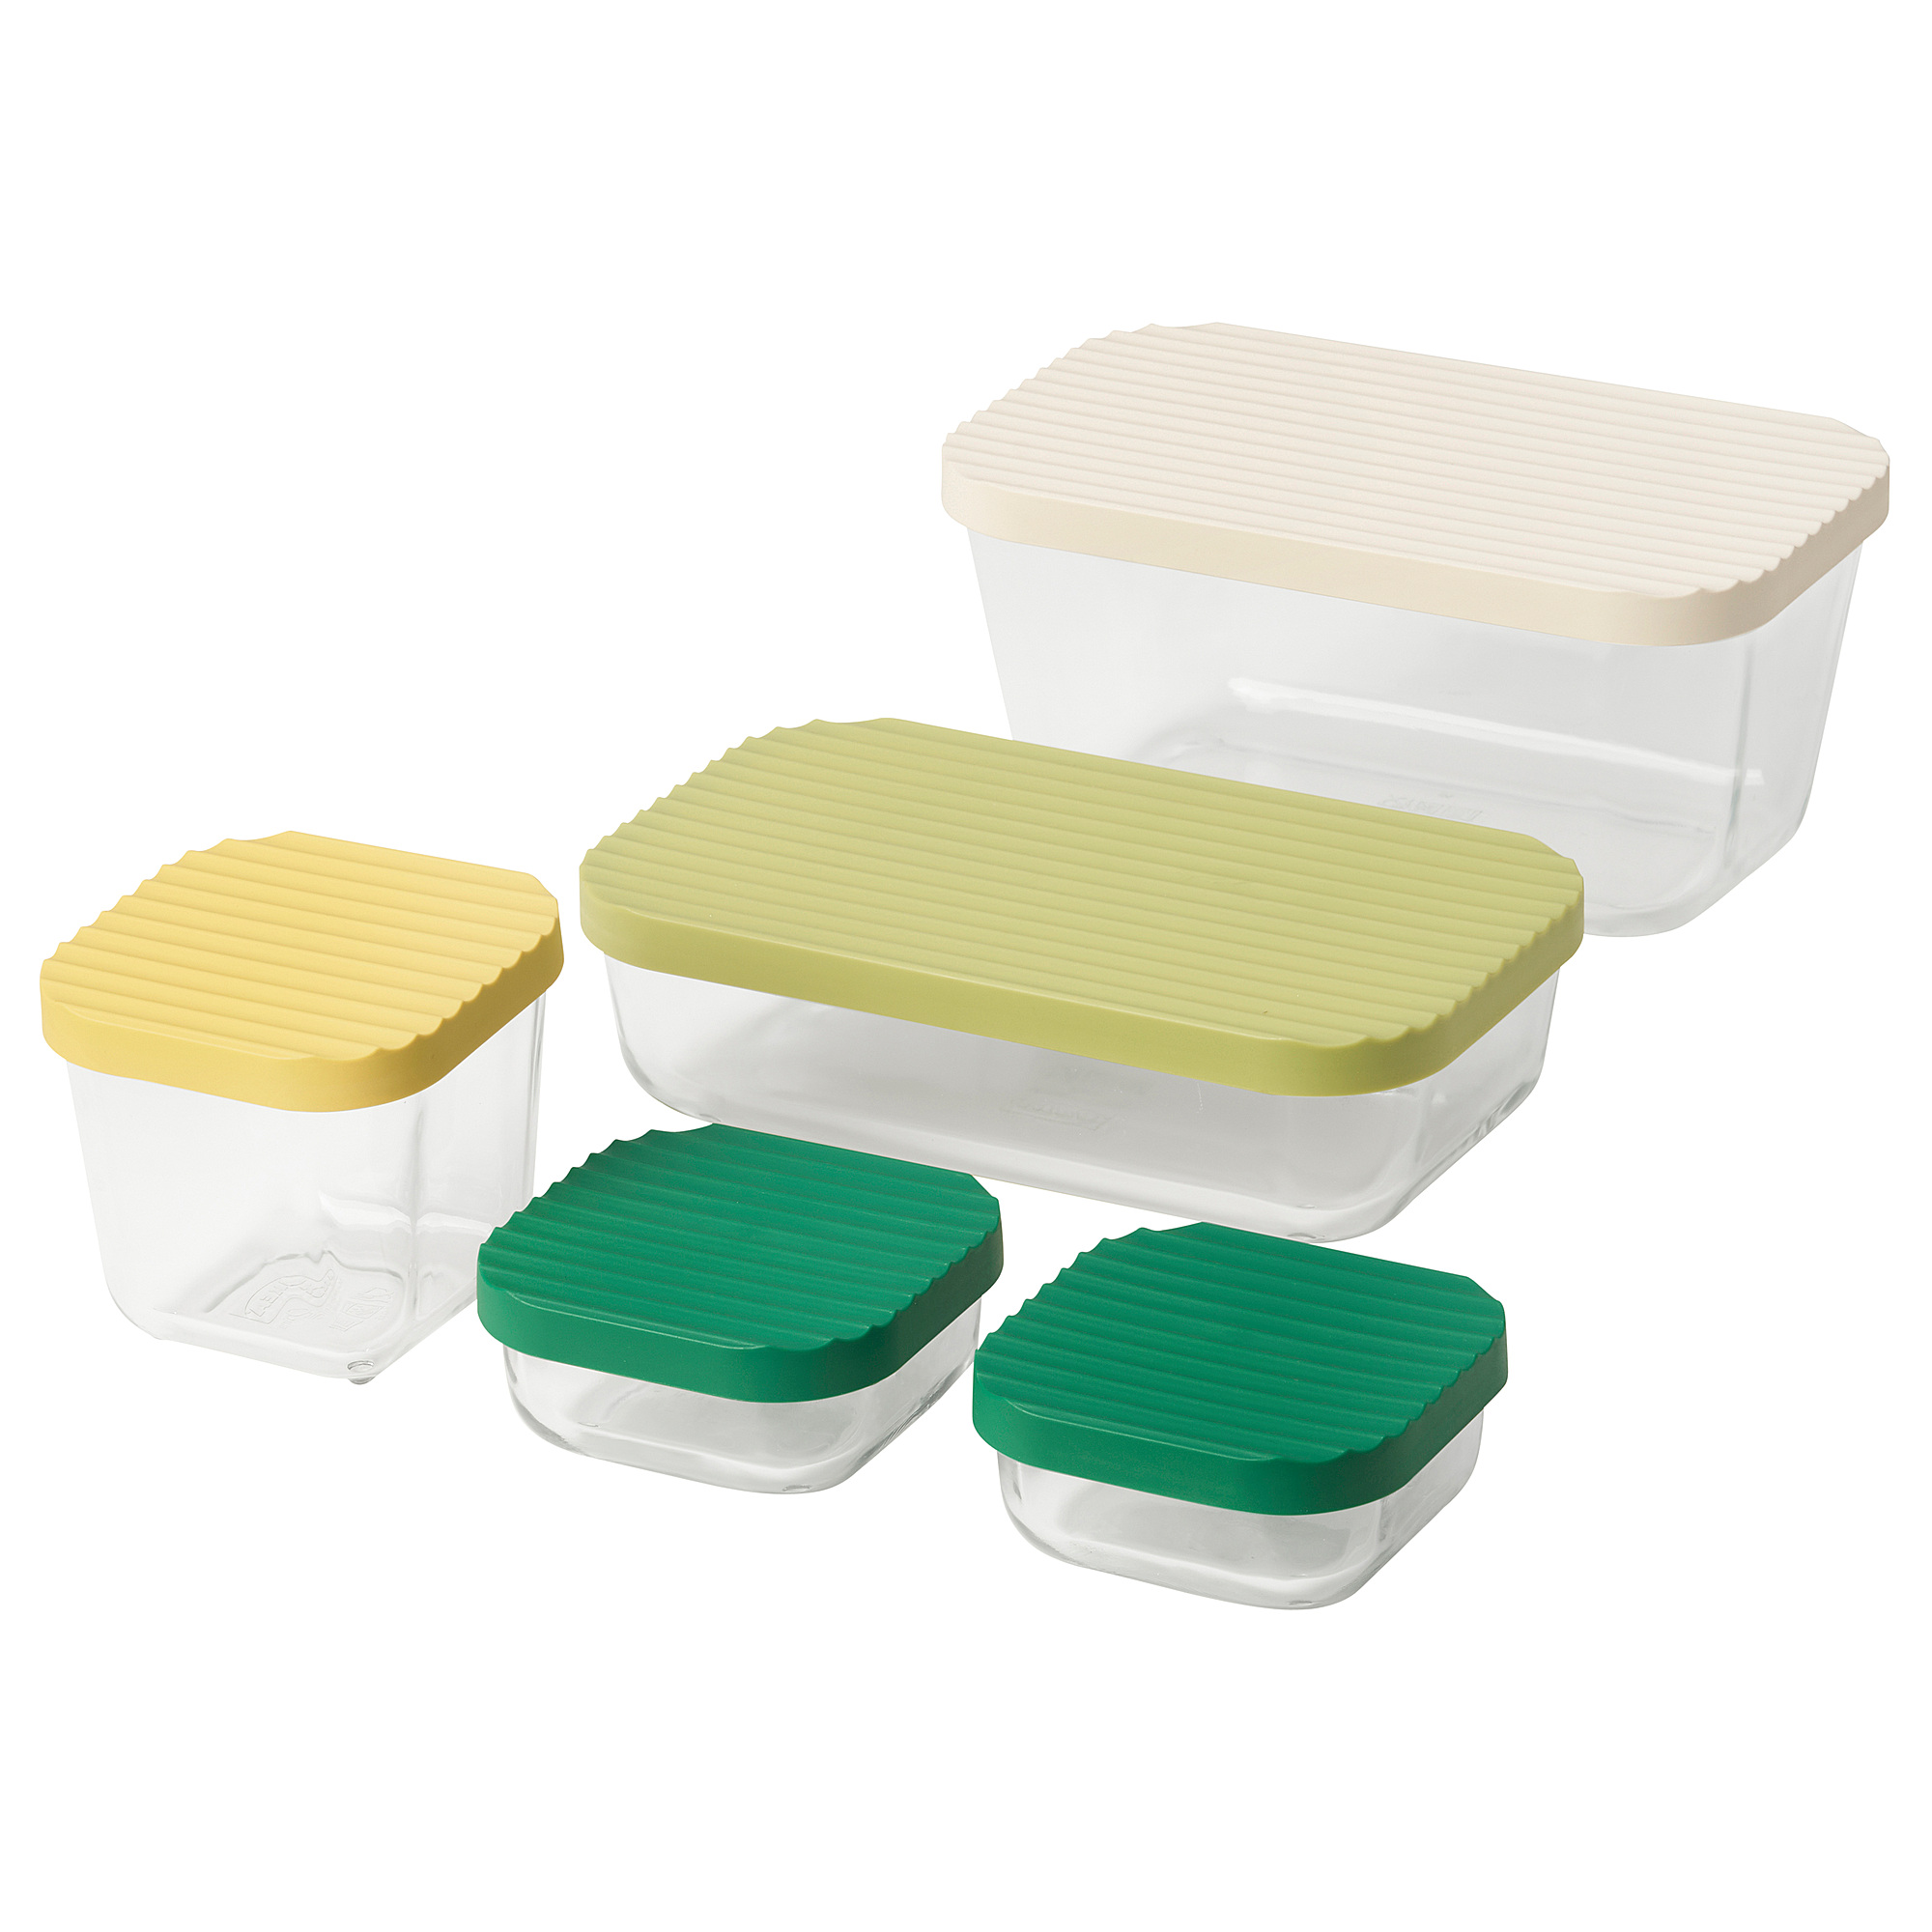 HAVSTOBIS 食物盒附蓋 5件組